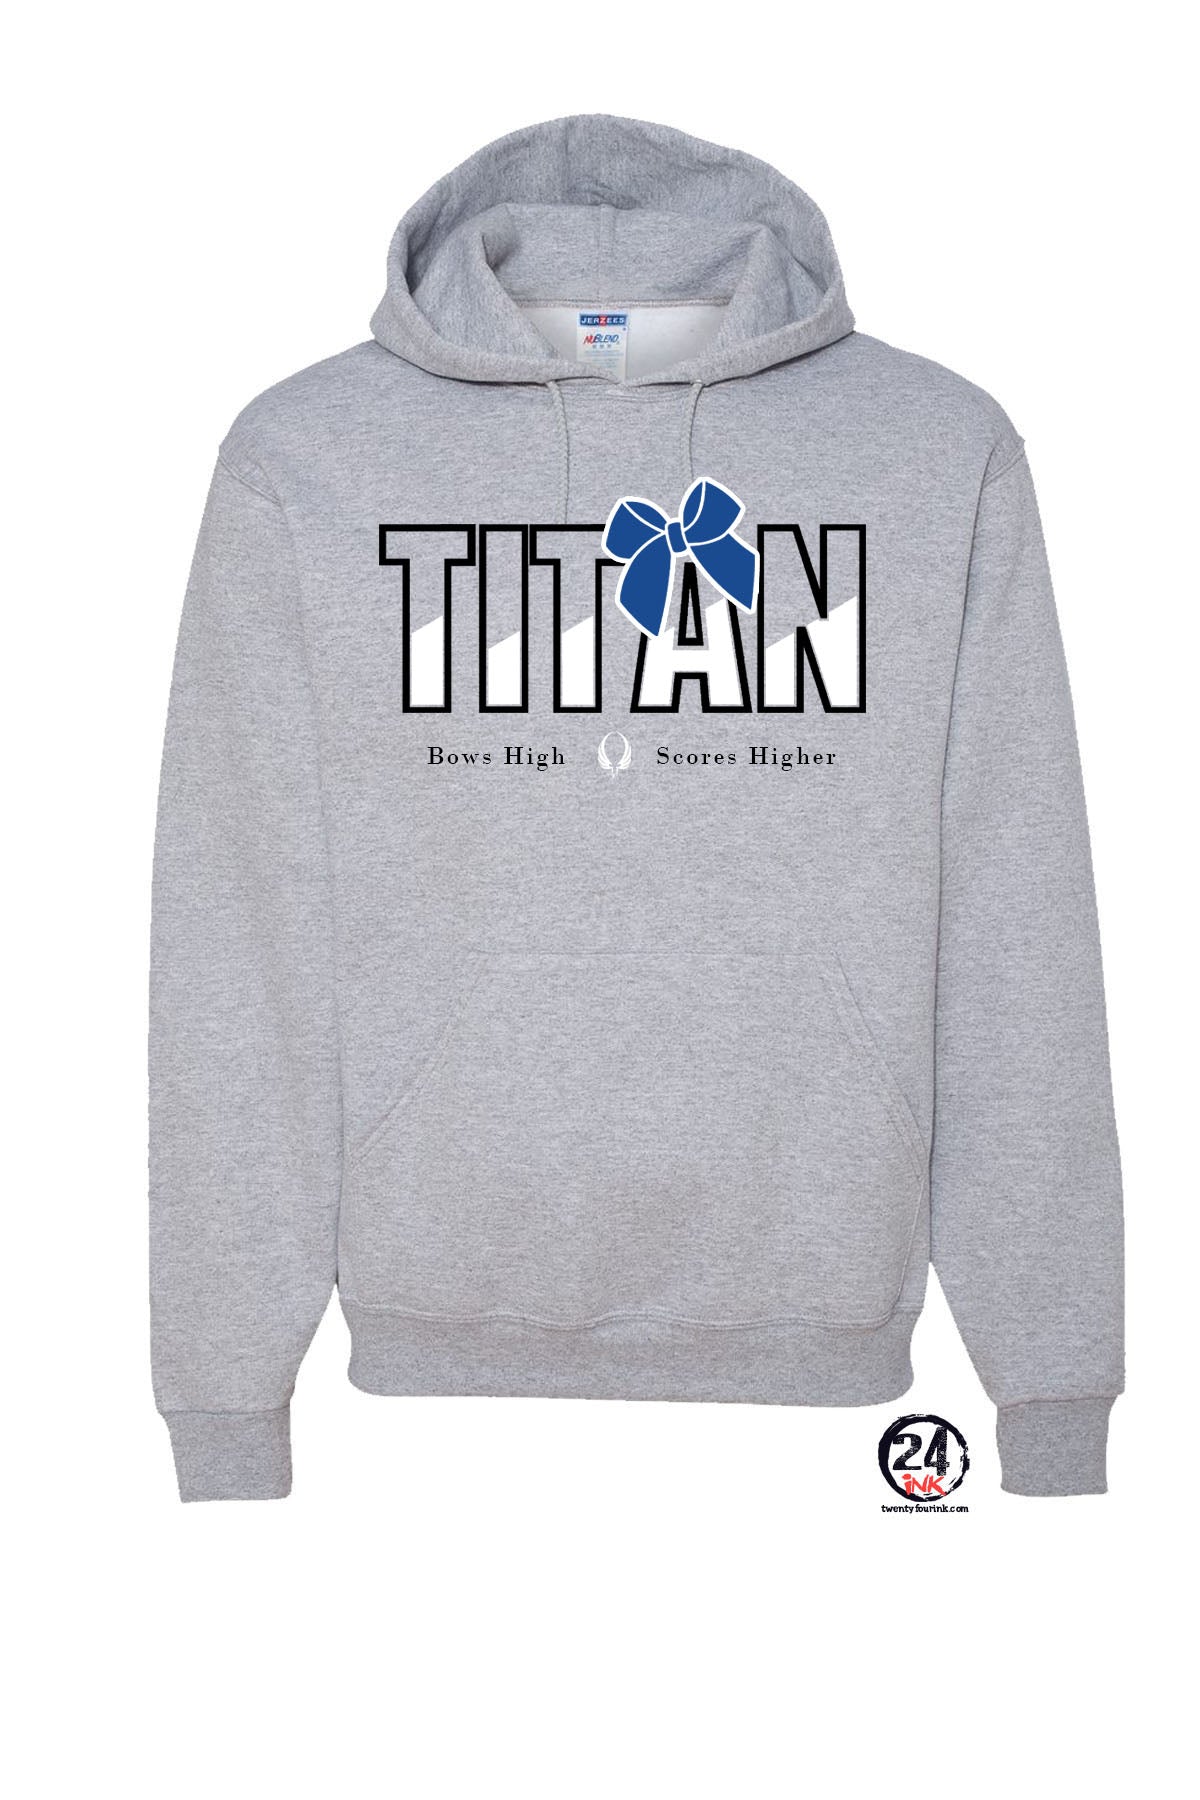 Titan Bows High Hooded Sweatshirt